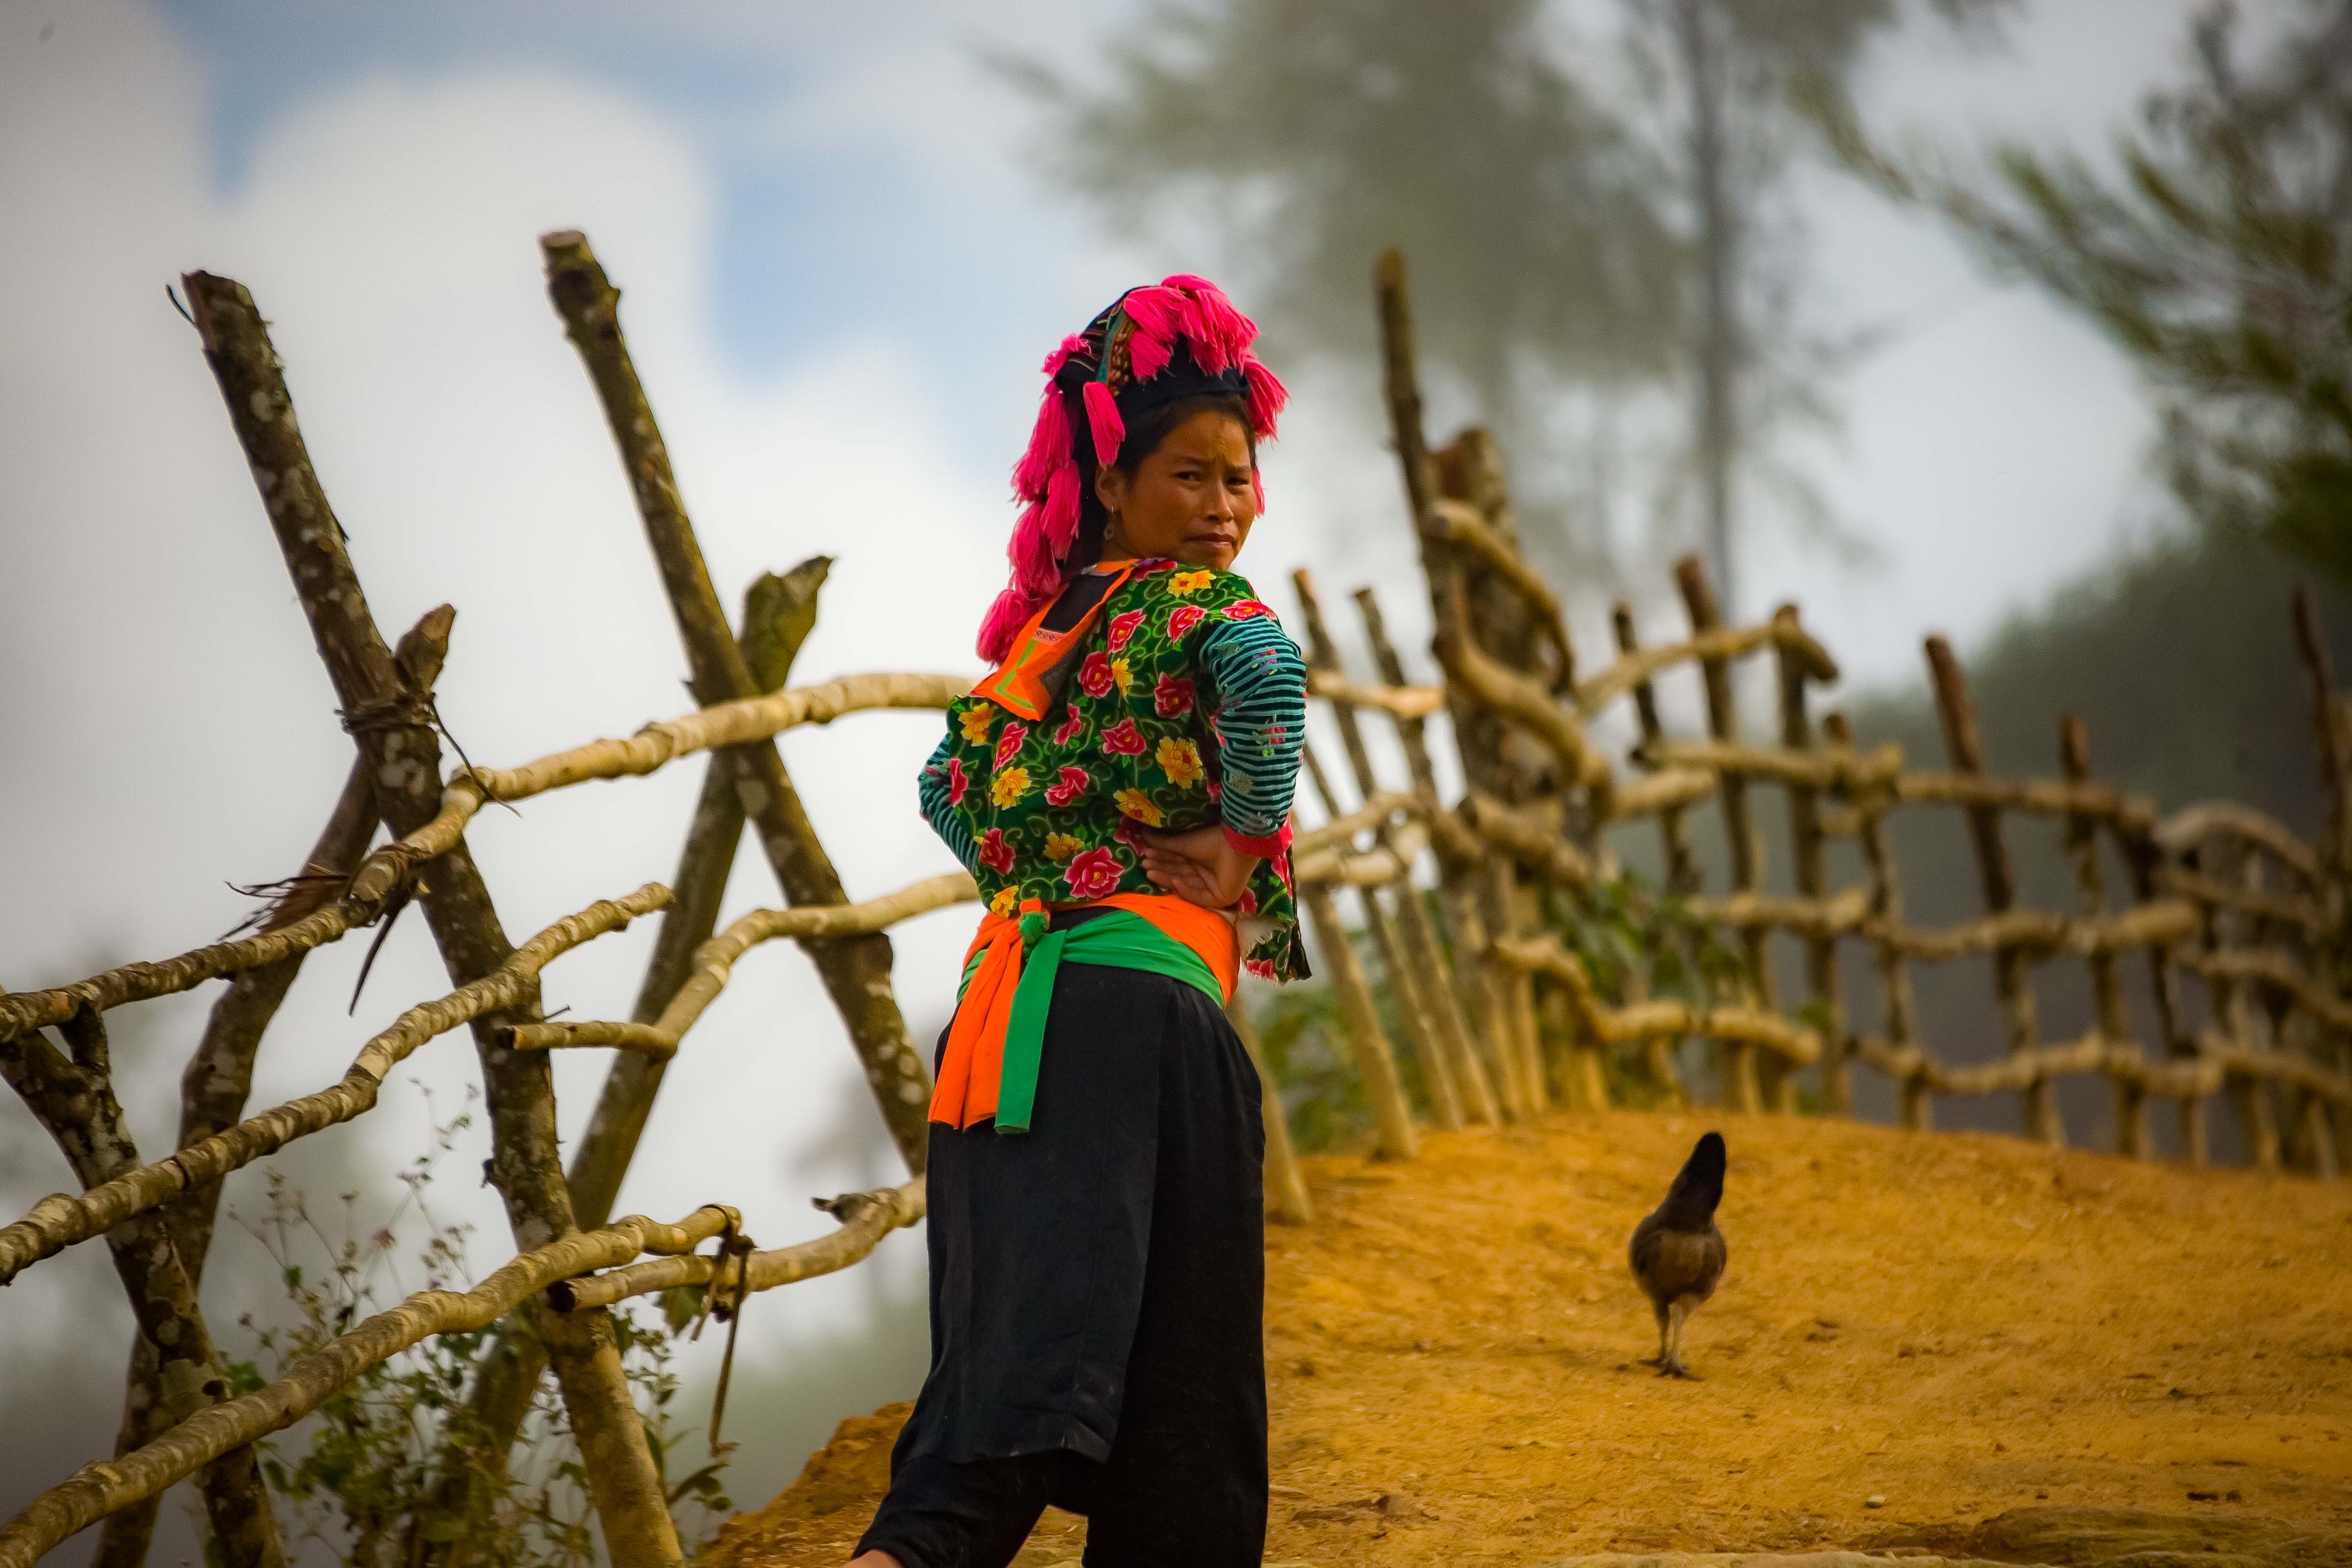 Vietnam, Son La Prov, Tribeswoman, 2008, IMG_8147